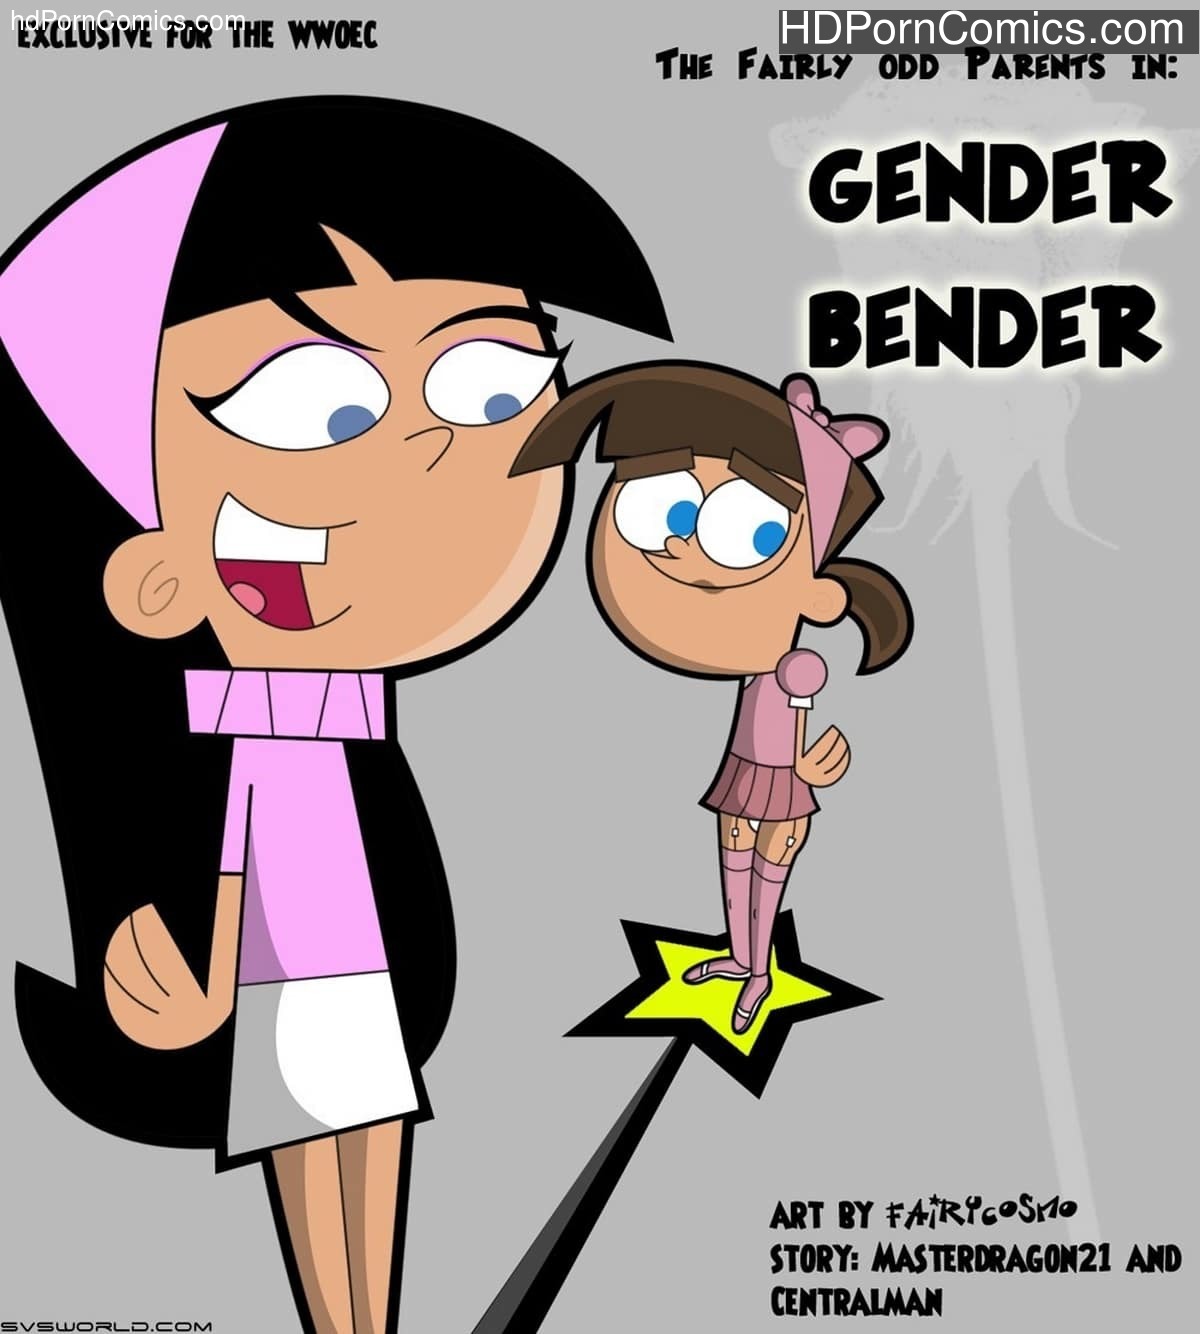 Shemale Bender - FOP -Gender Bender free Cartoon Porn Comic - HD Porn Comics